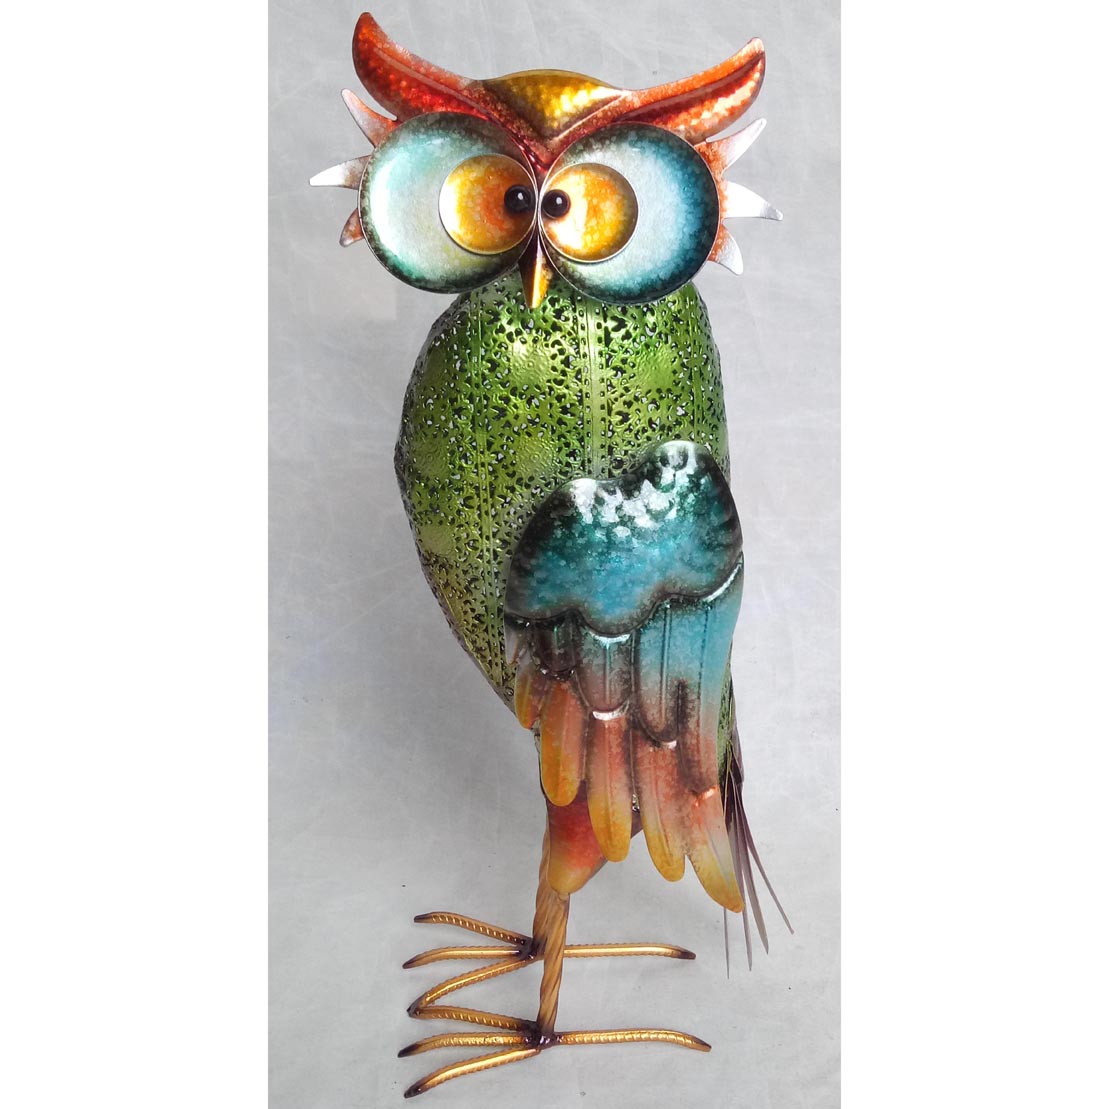 Hand-made metal garden decor owl ornament